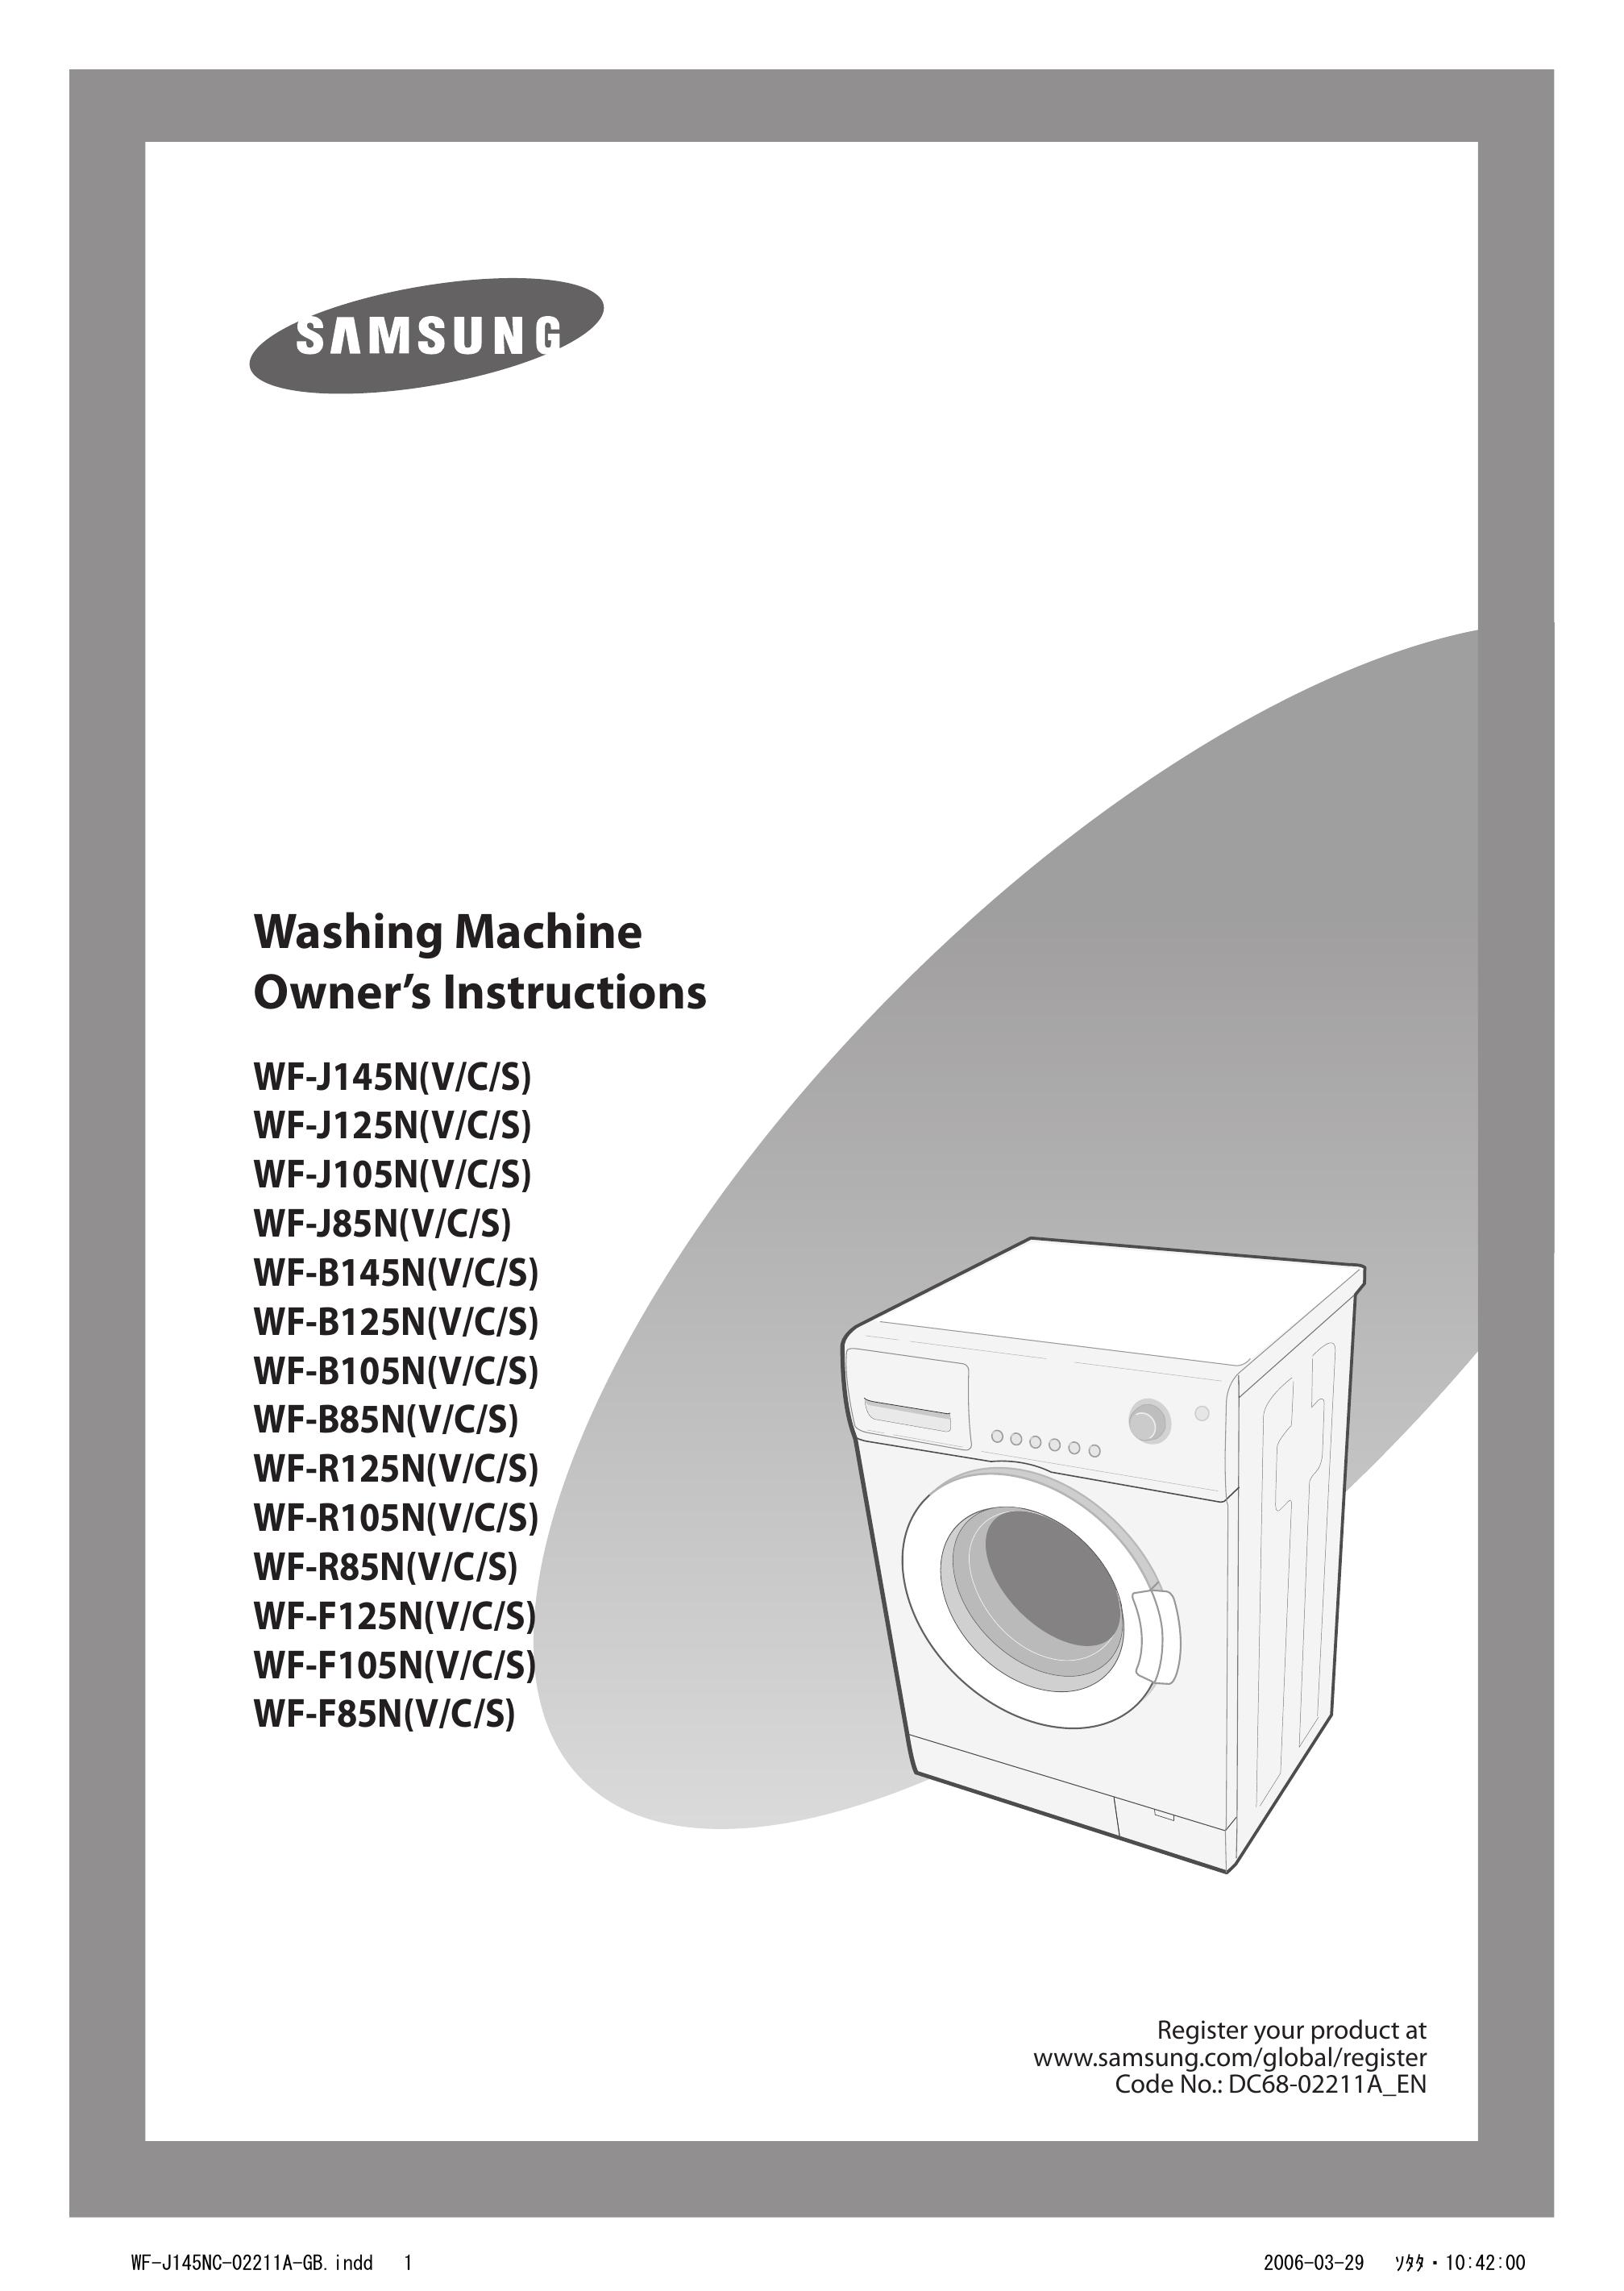 Samsung WF-B85N(V/C/S) Washer/Dryer User Manual